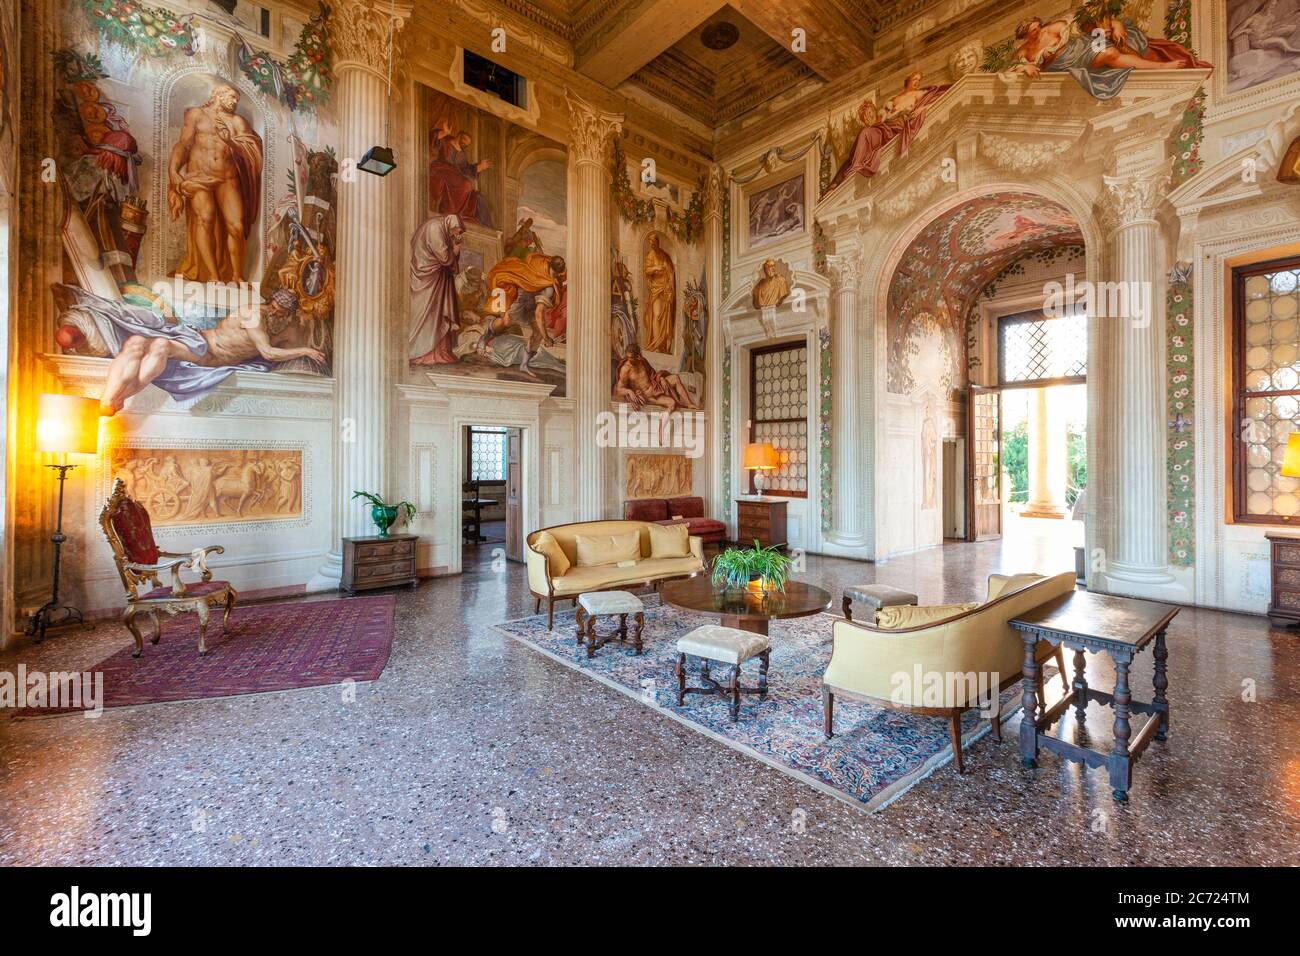 Italy Veneto Fanzolo - Villa Emo Architect Andrea Palladio - The Large Hall - Frescoes by Battista Zelotti Stock Photo